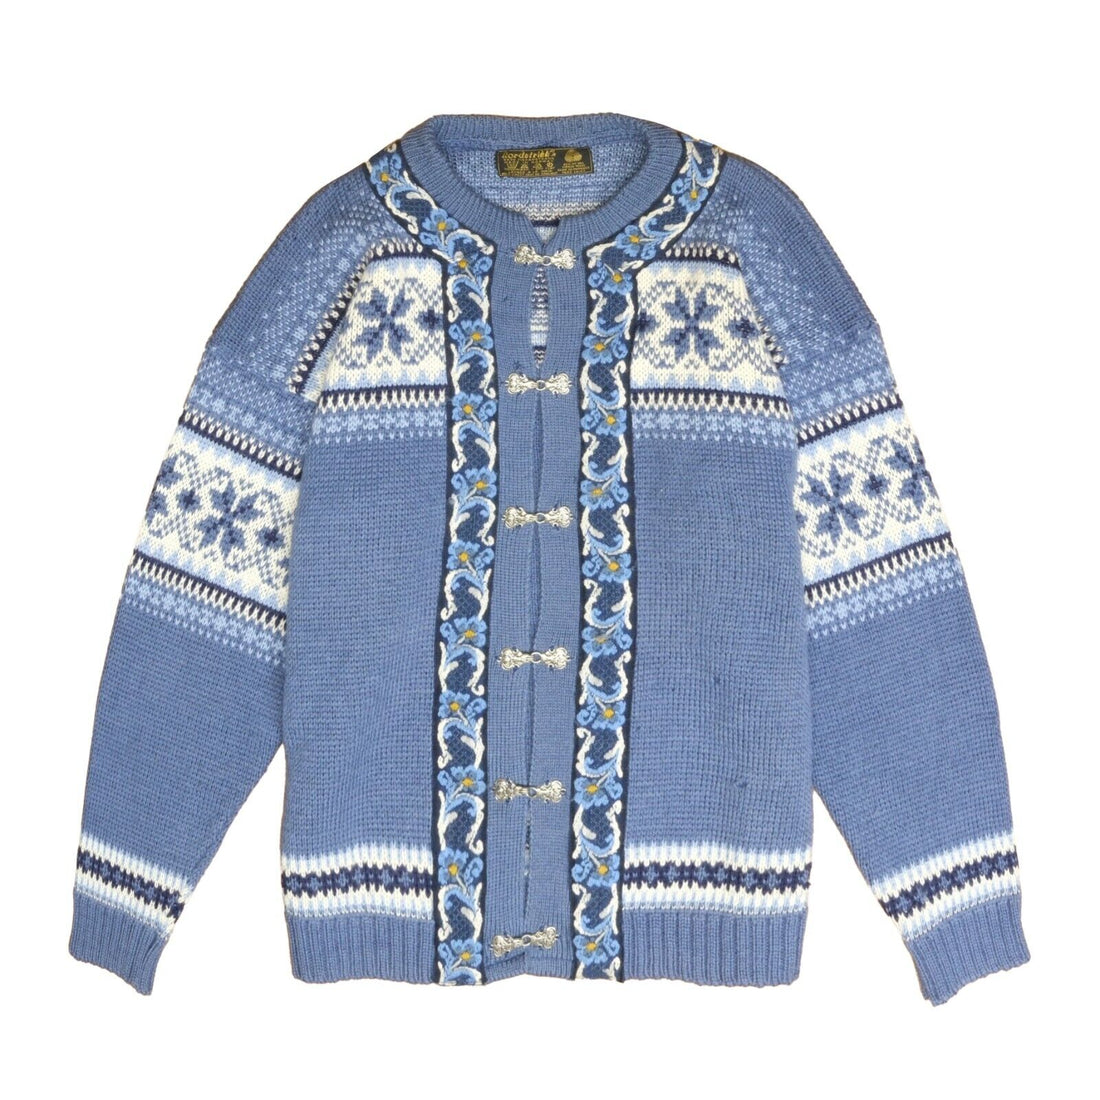 Vintage Nordstrikk Wool Knit Cardigan Sweater Size Small Fair Isle